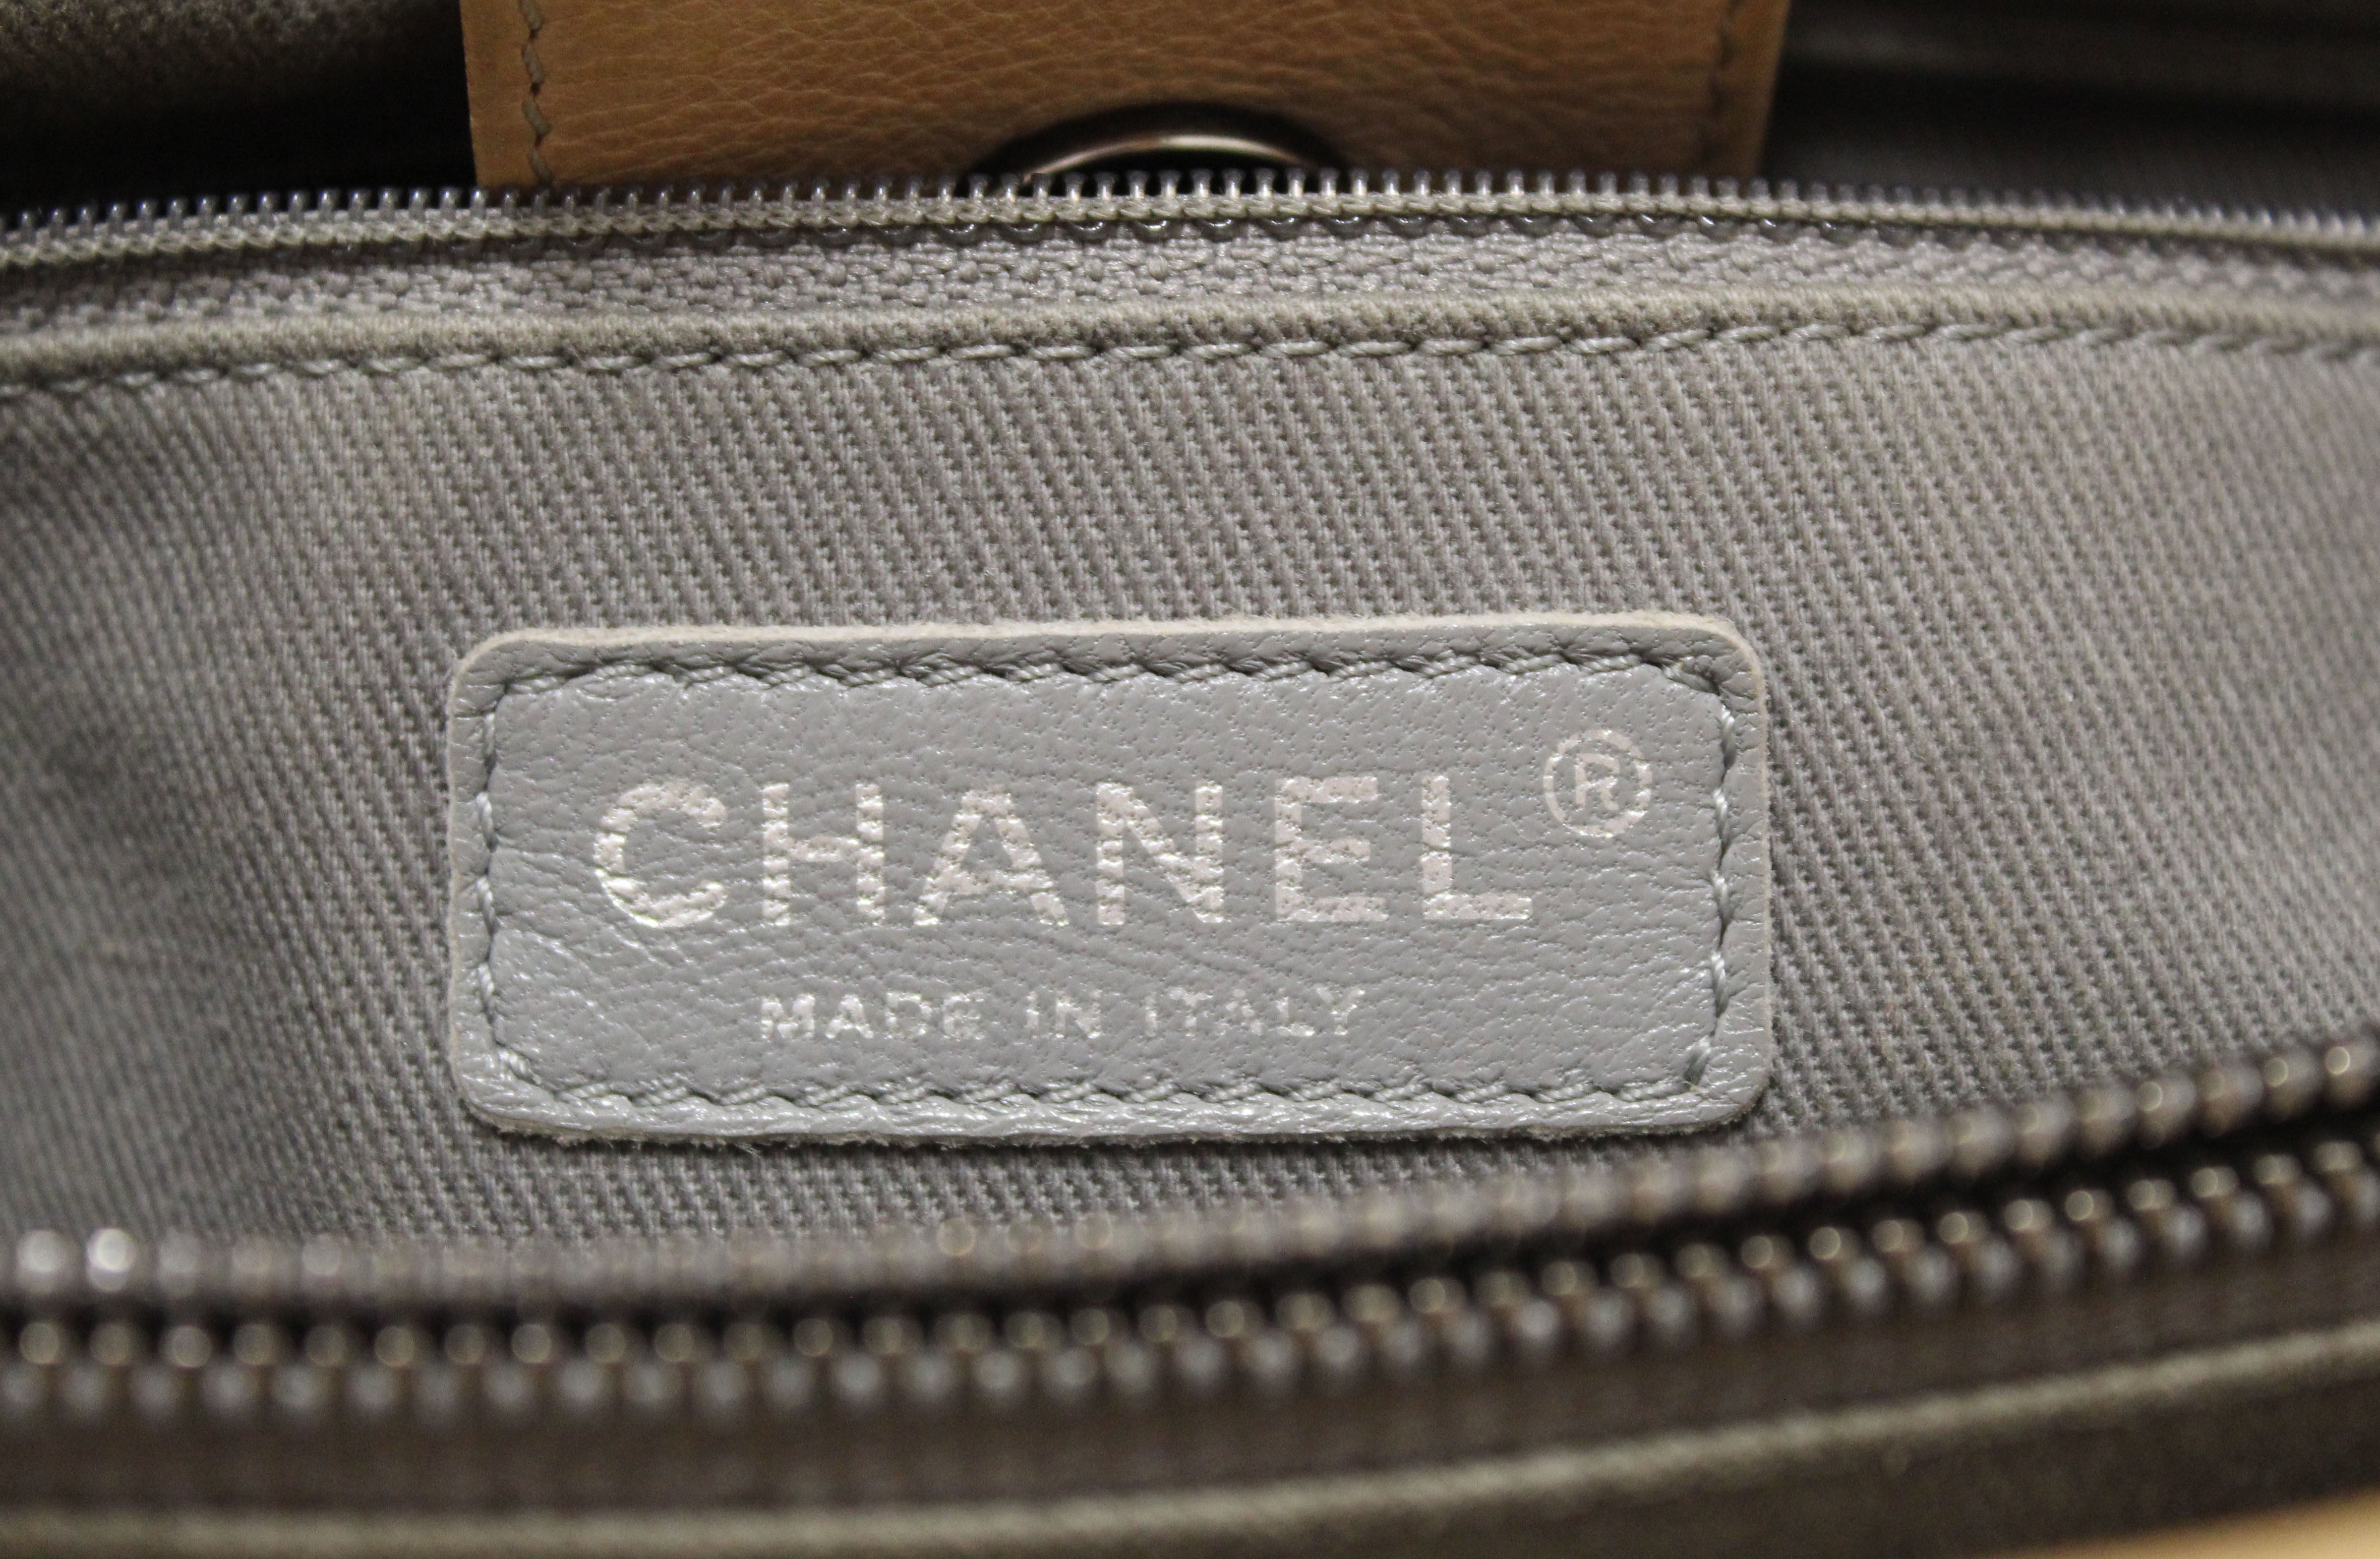 Chanel 31 Rue Cambon Paris Tote Shoulder Bag